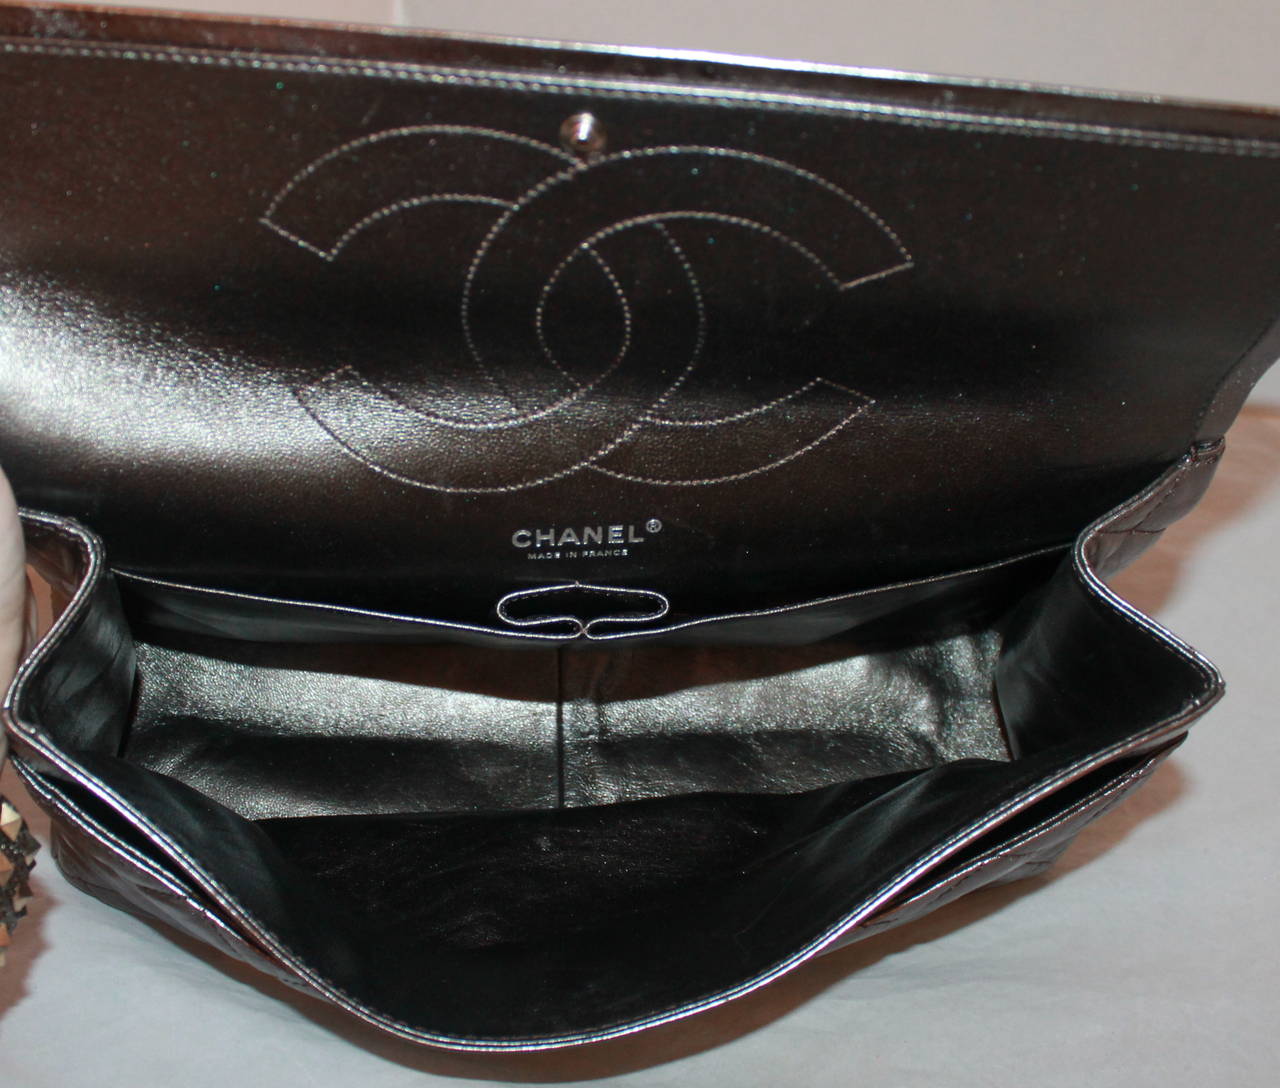 Chanel Reissue Metallic Pewter 227 Maxi Handbag SHW - circa 2007 1